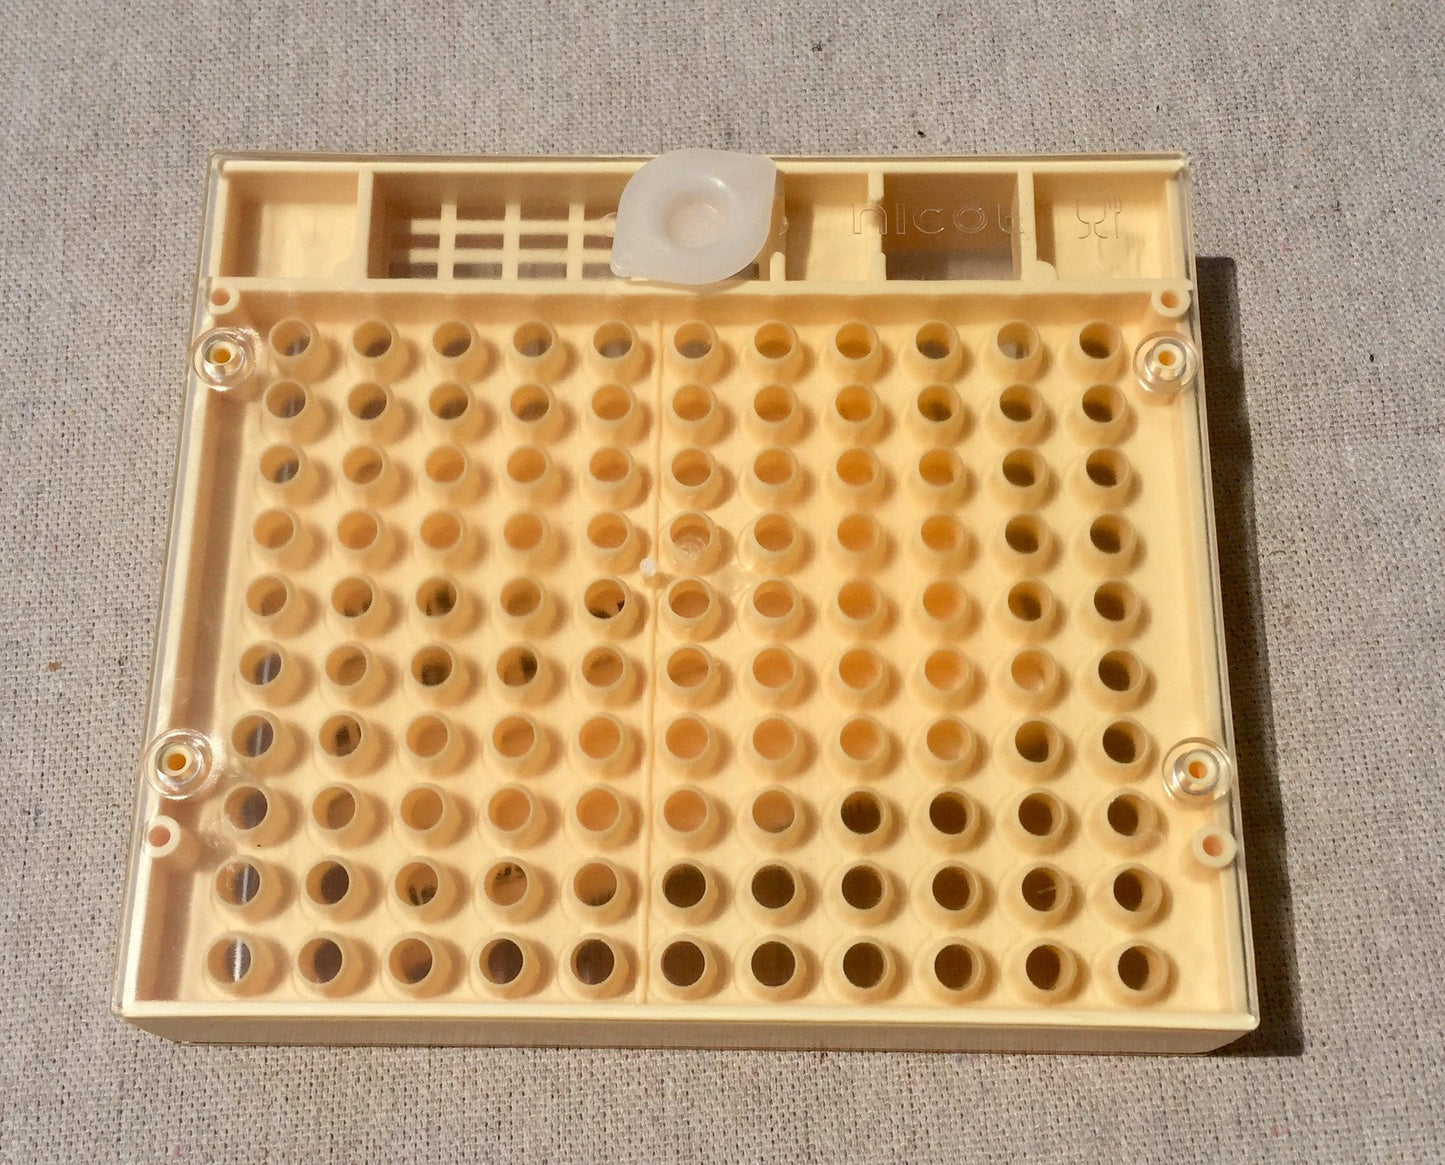 Nicot Comb Box